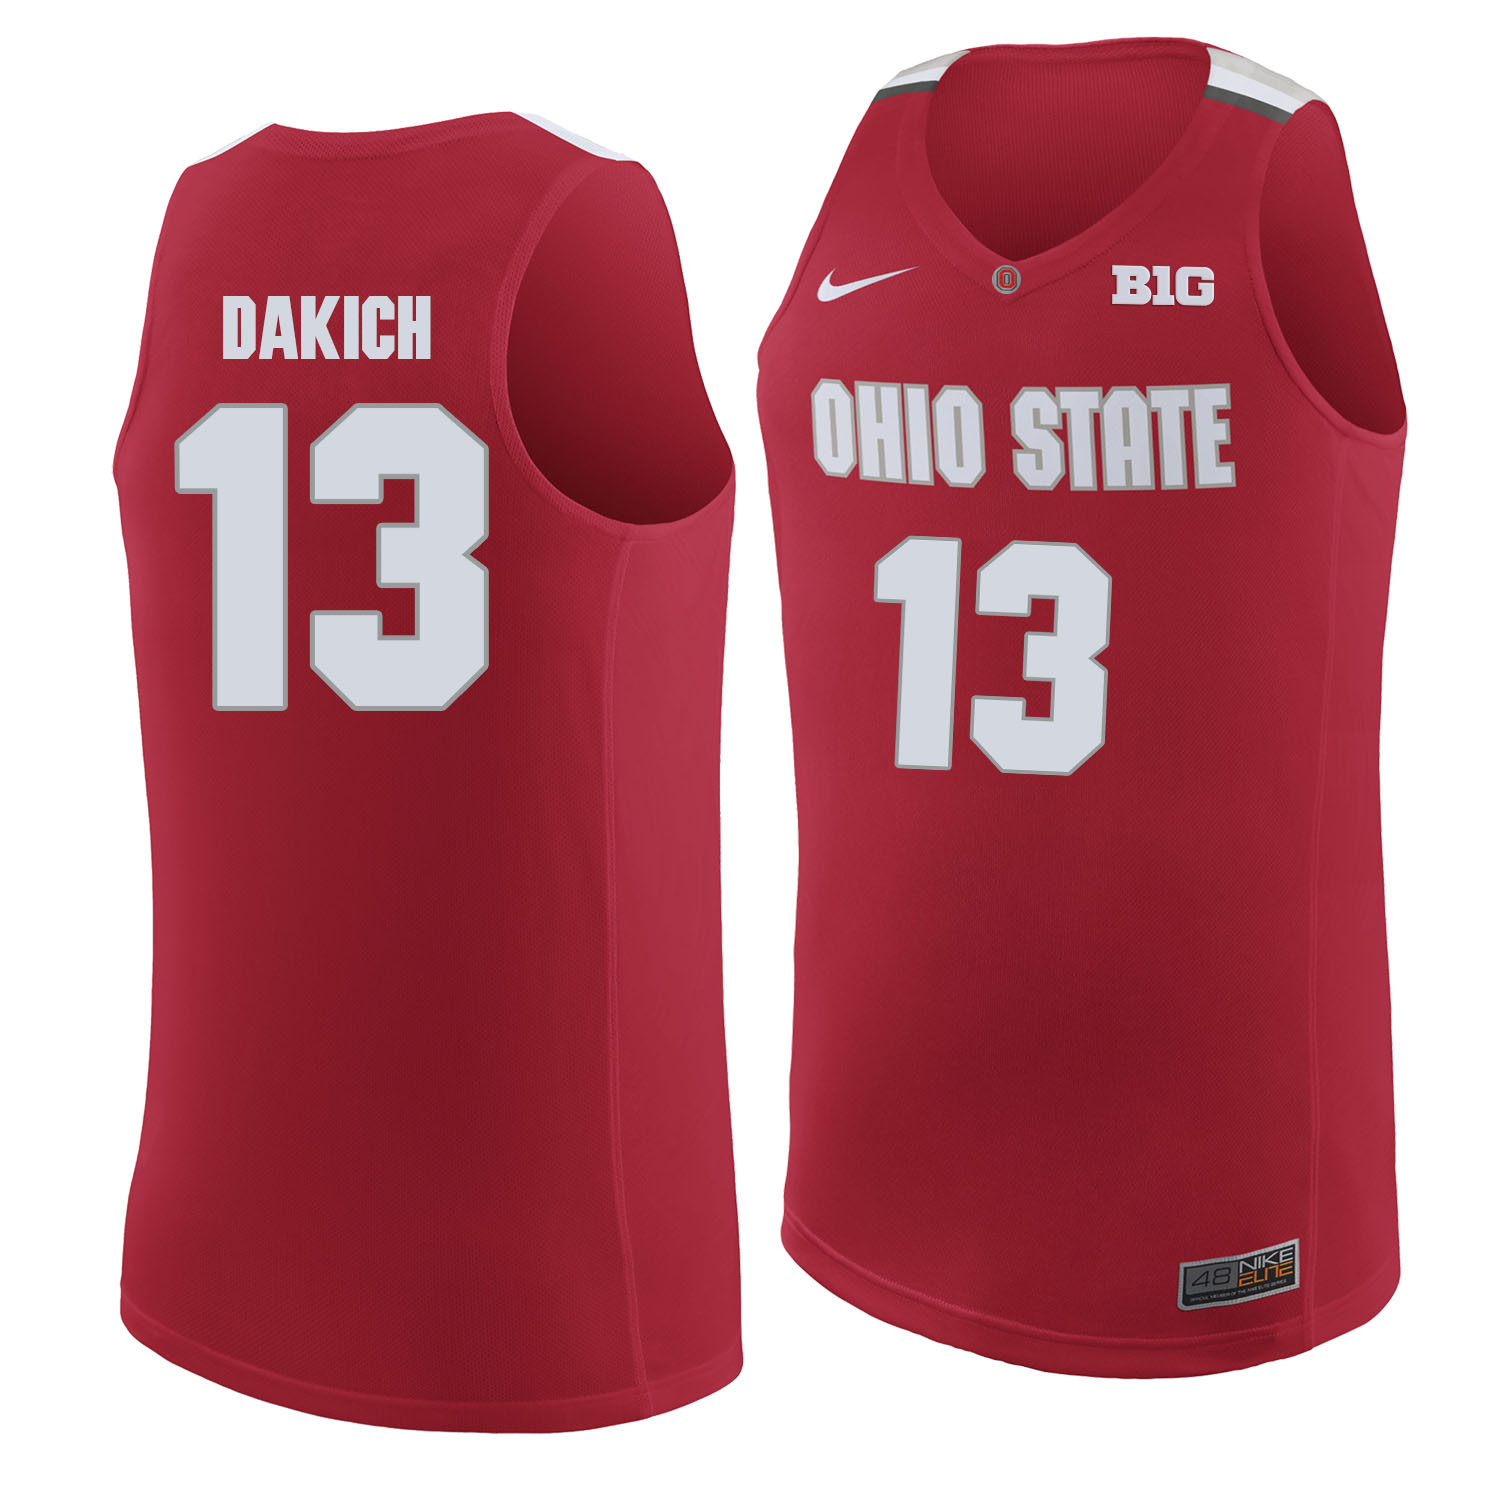 Ohio State Buckeyes 13 Andrew Dakich Red College Basketball Jersey